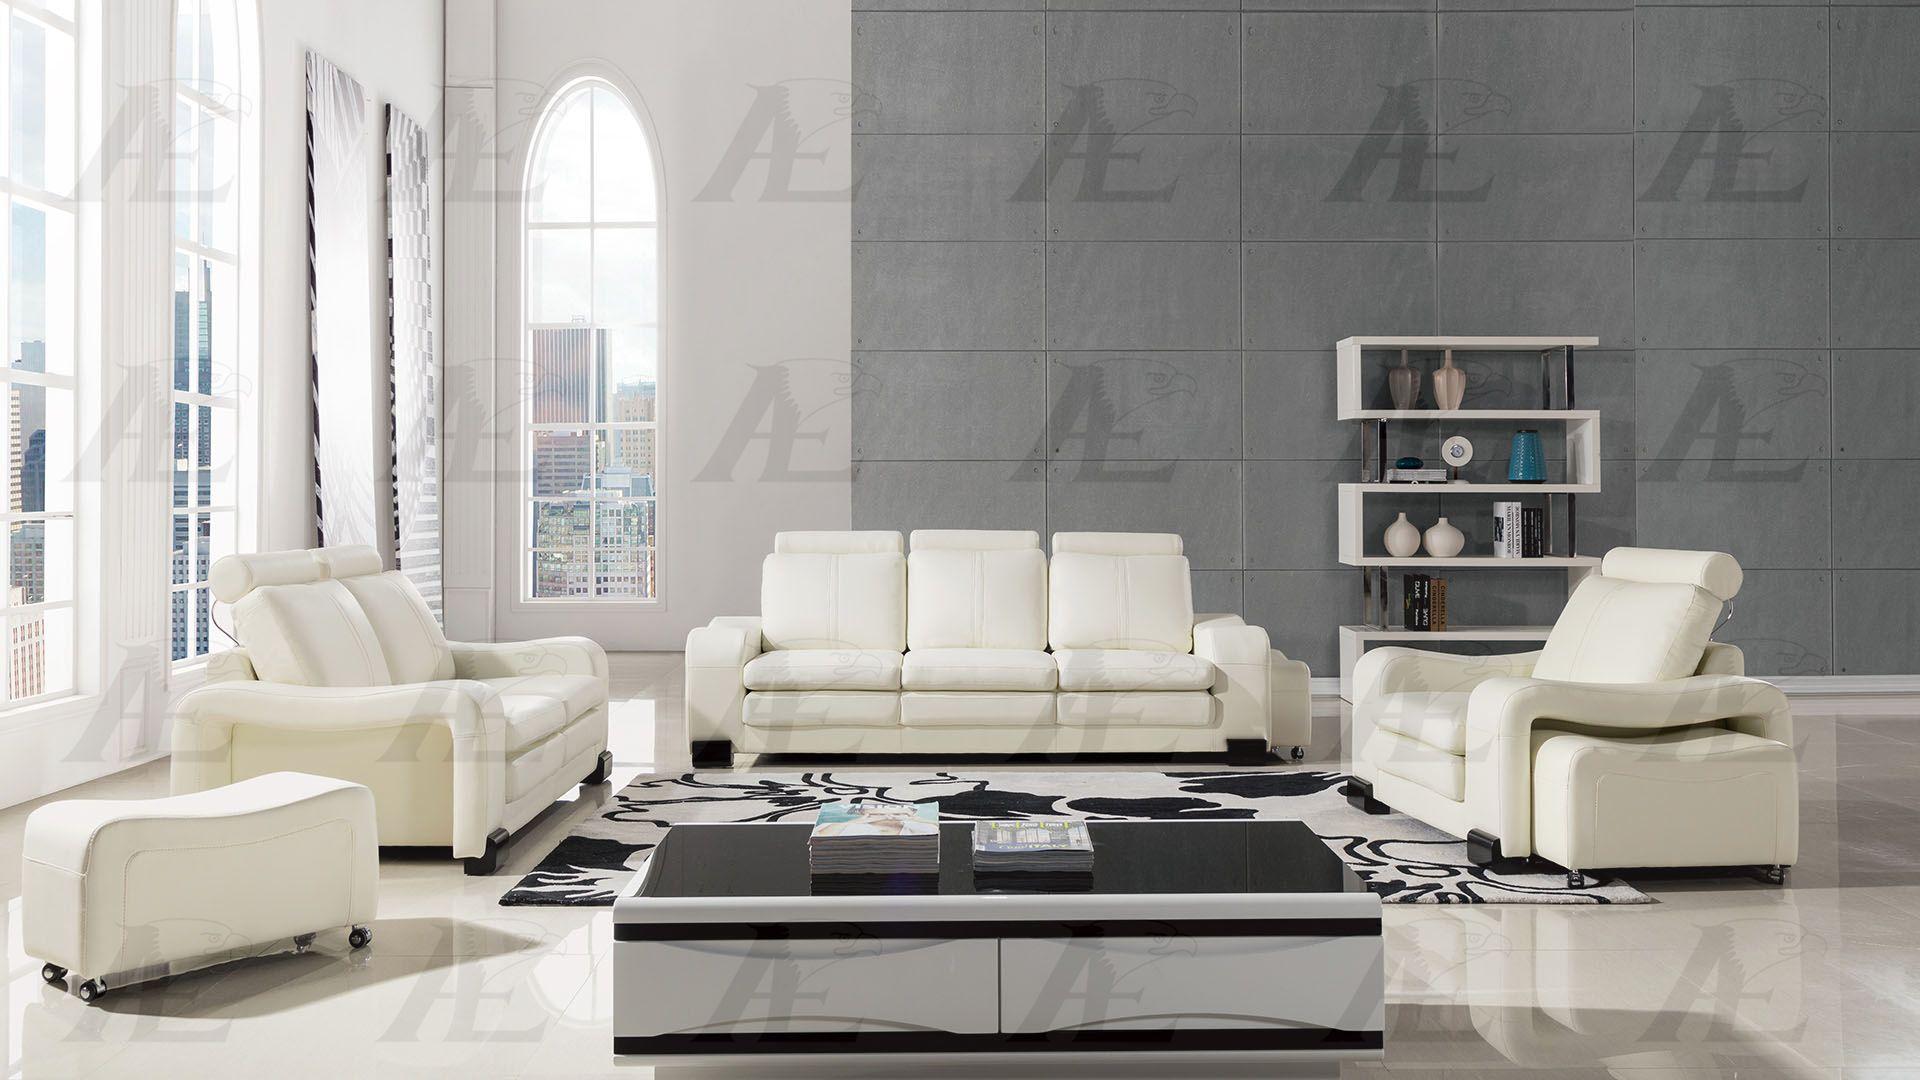 

                    
American Eagle Furniture AE210-IV-SF Sofa and Ottoman Ivory Faux Leather Purchase 
